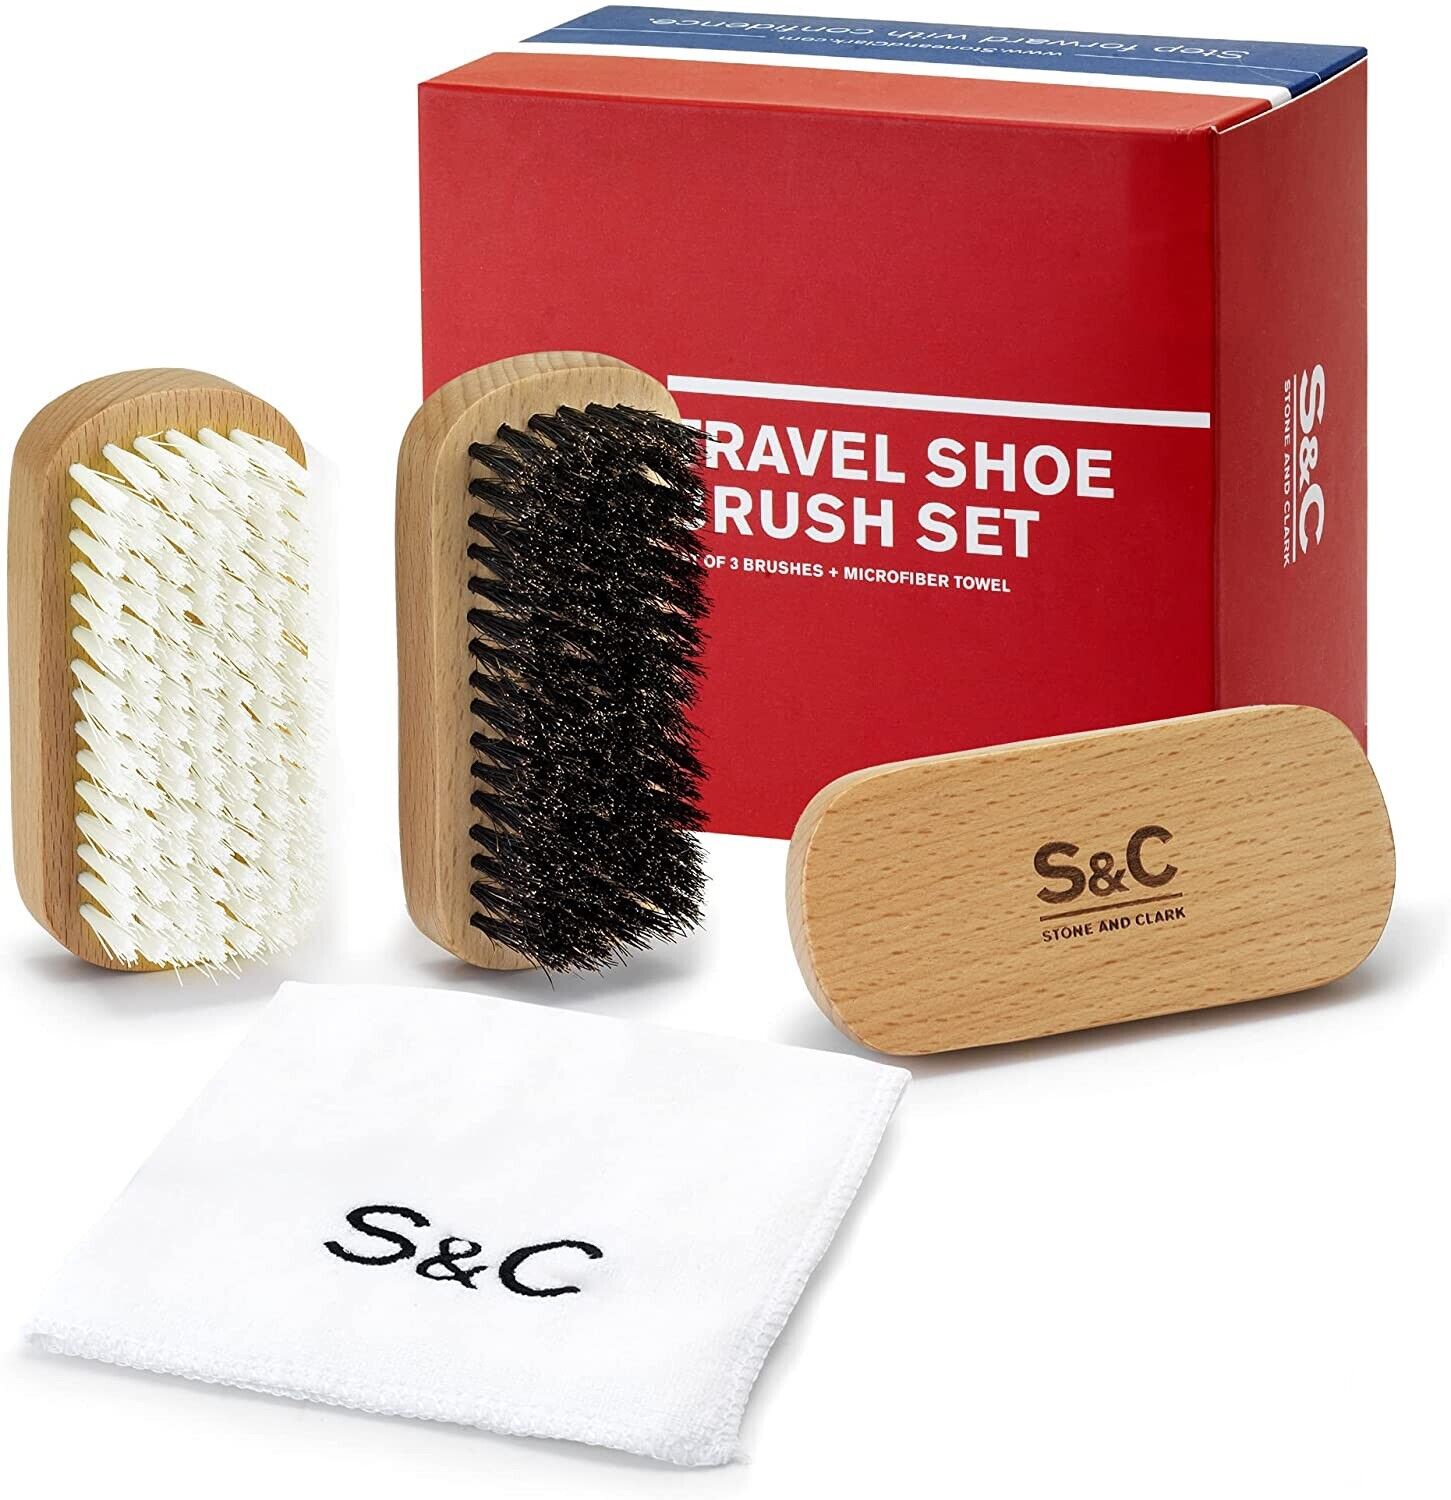 Travel Shoe Brush Set - Horsehair Brush For Polishing & Buffing, Boar Suede Wood